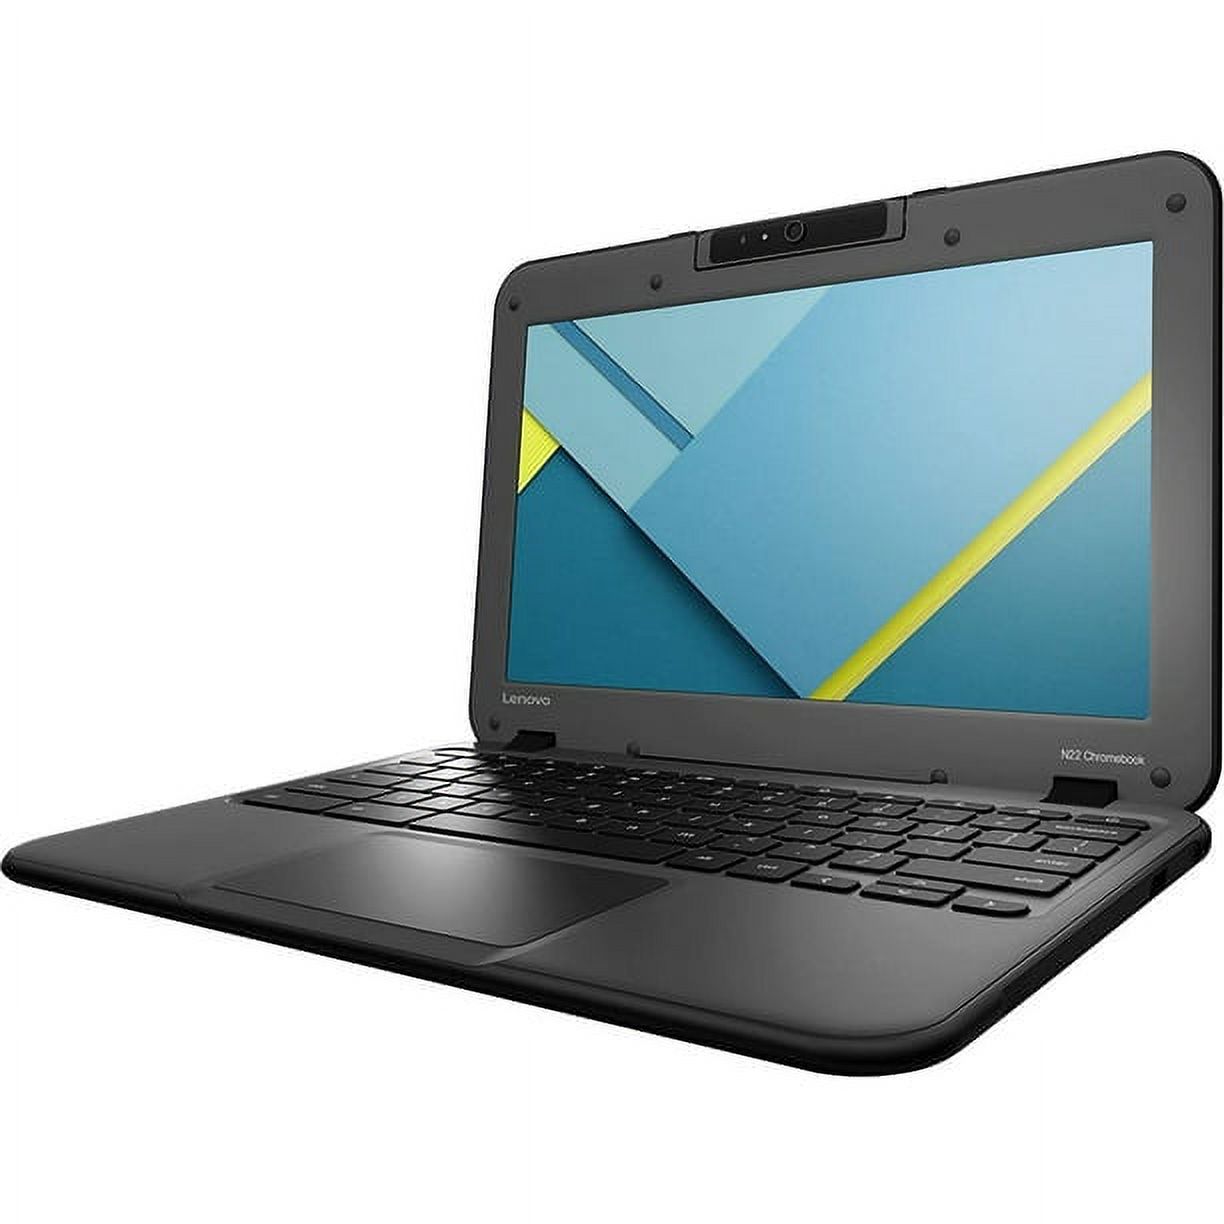 Restored Lenovo Chromebook N22 80SF0001US Intel Celeron N3050 1.6GHz 4GB 16GB 11.6" Black (Refurbished) - image 1 of 3